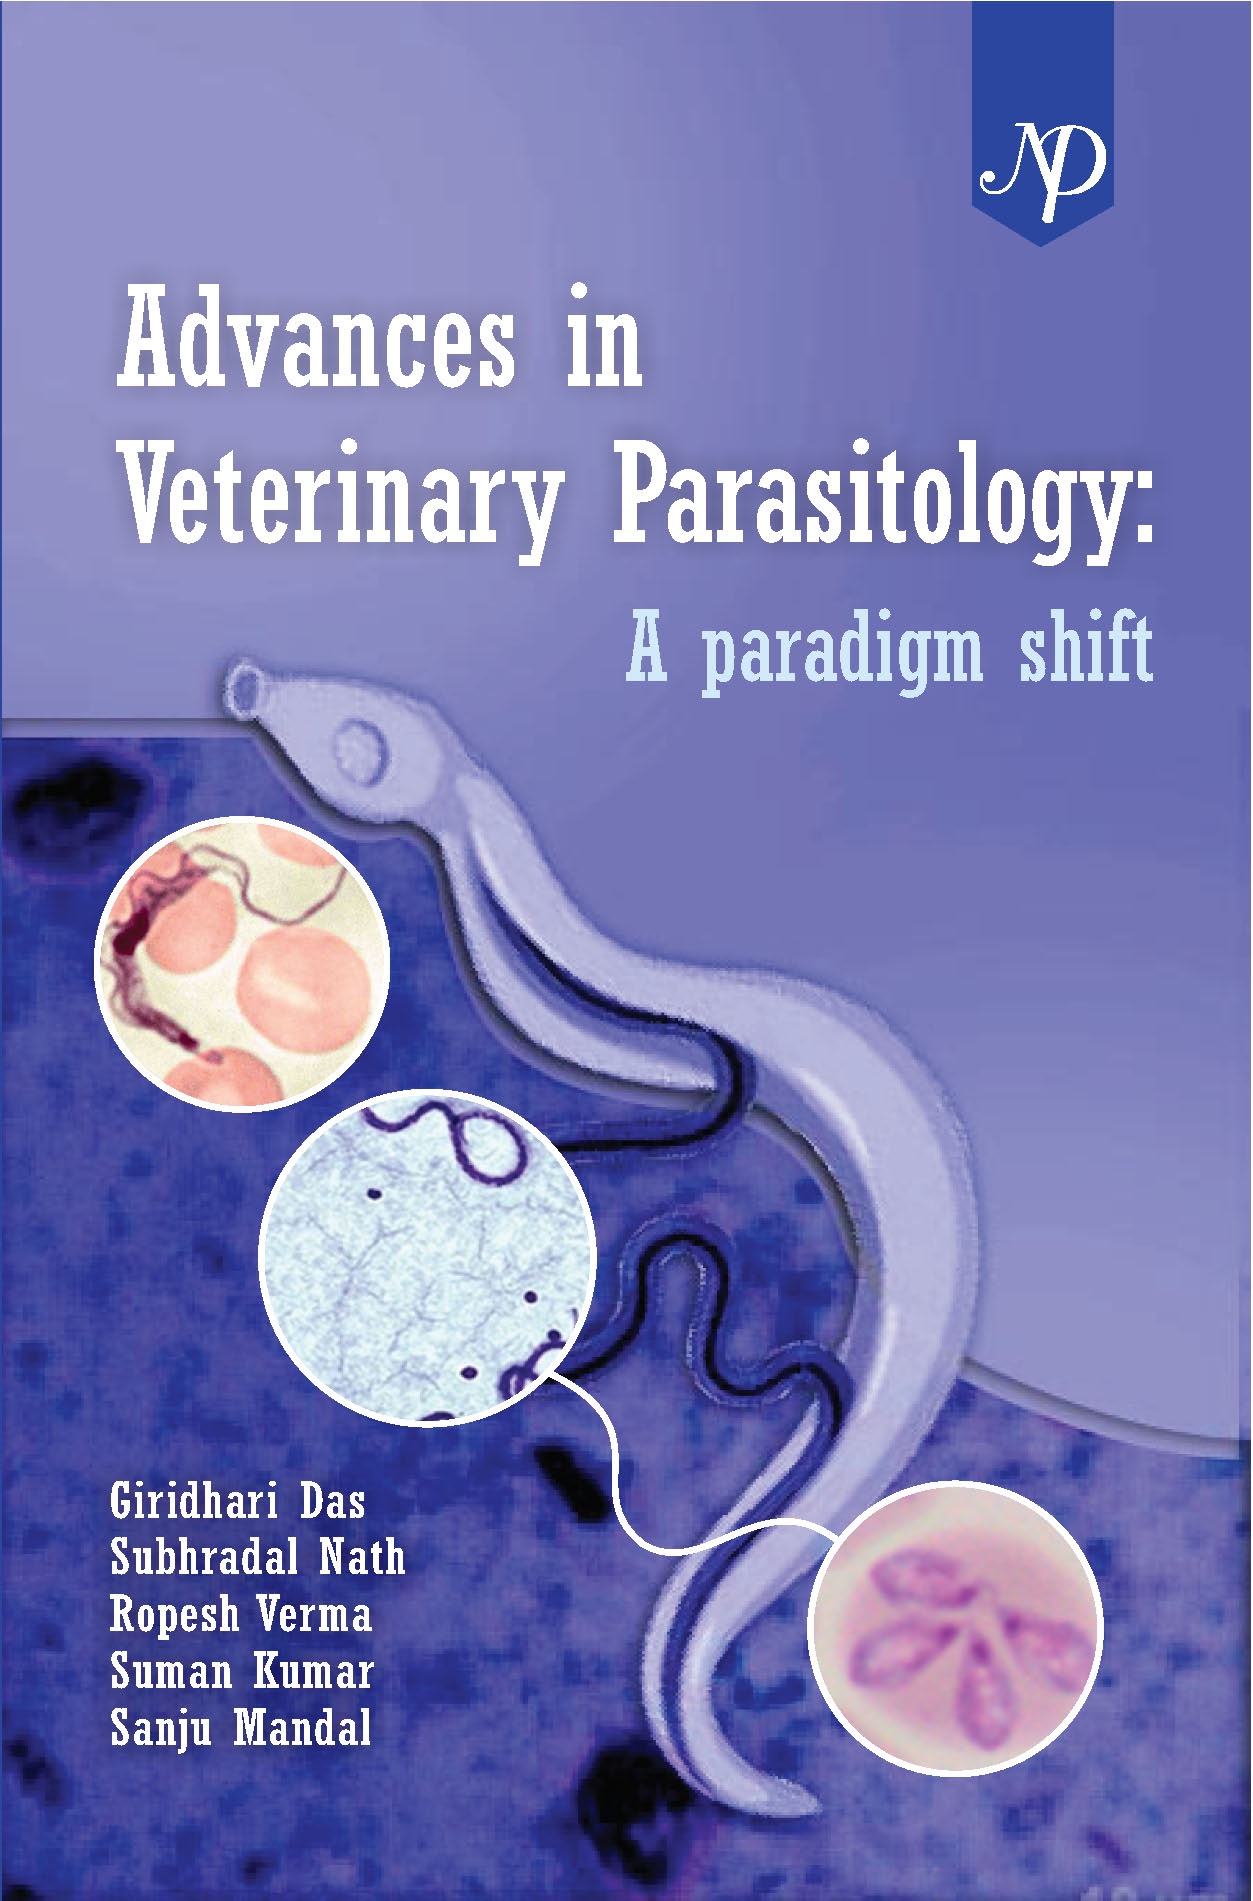 Advances in Veterinary Parasitology A paradigm shift Cover.jpg